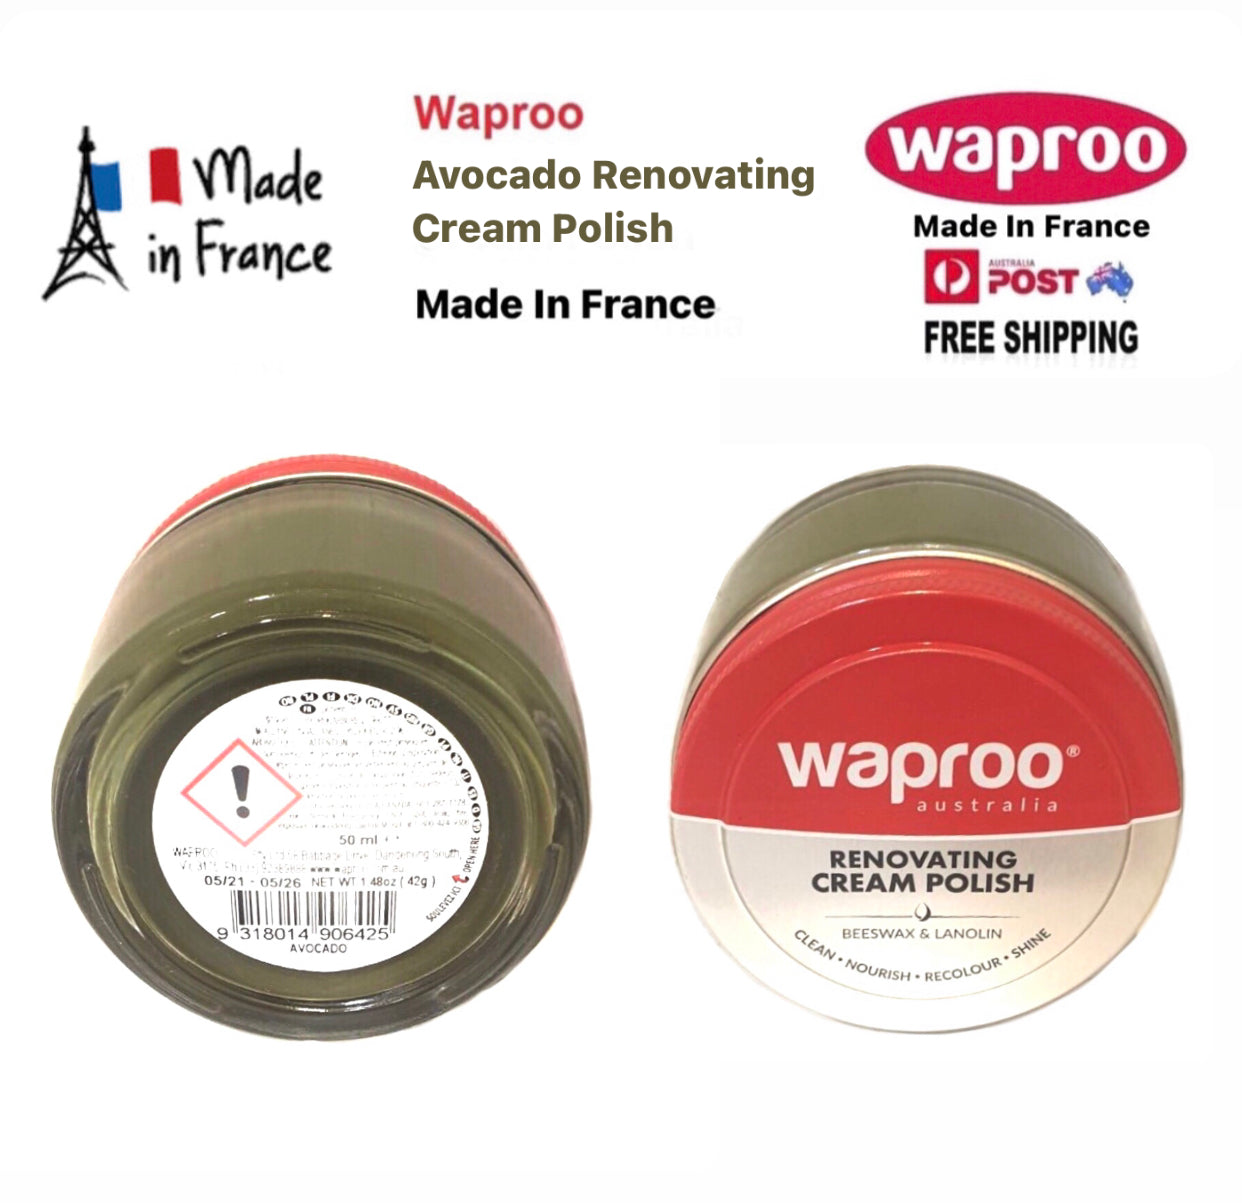 Waproo Avocado Green Renovating Cream Polish 42g Made In France